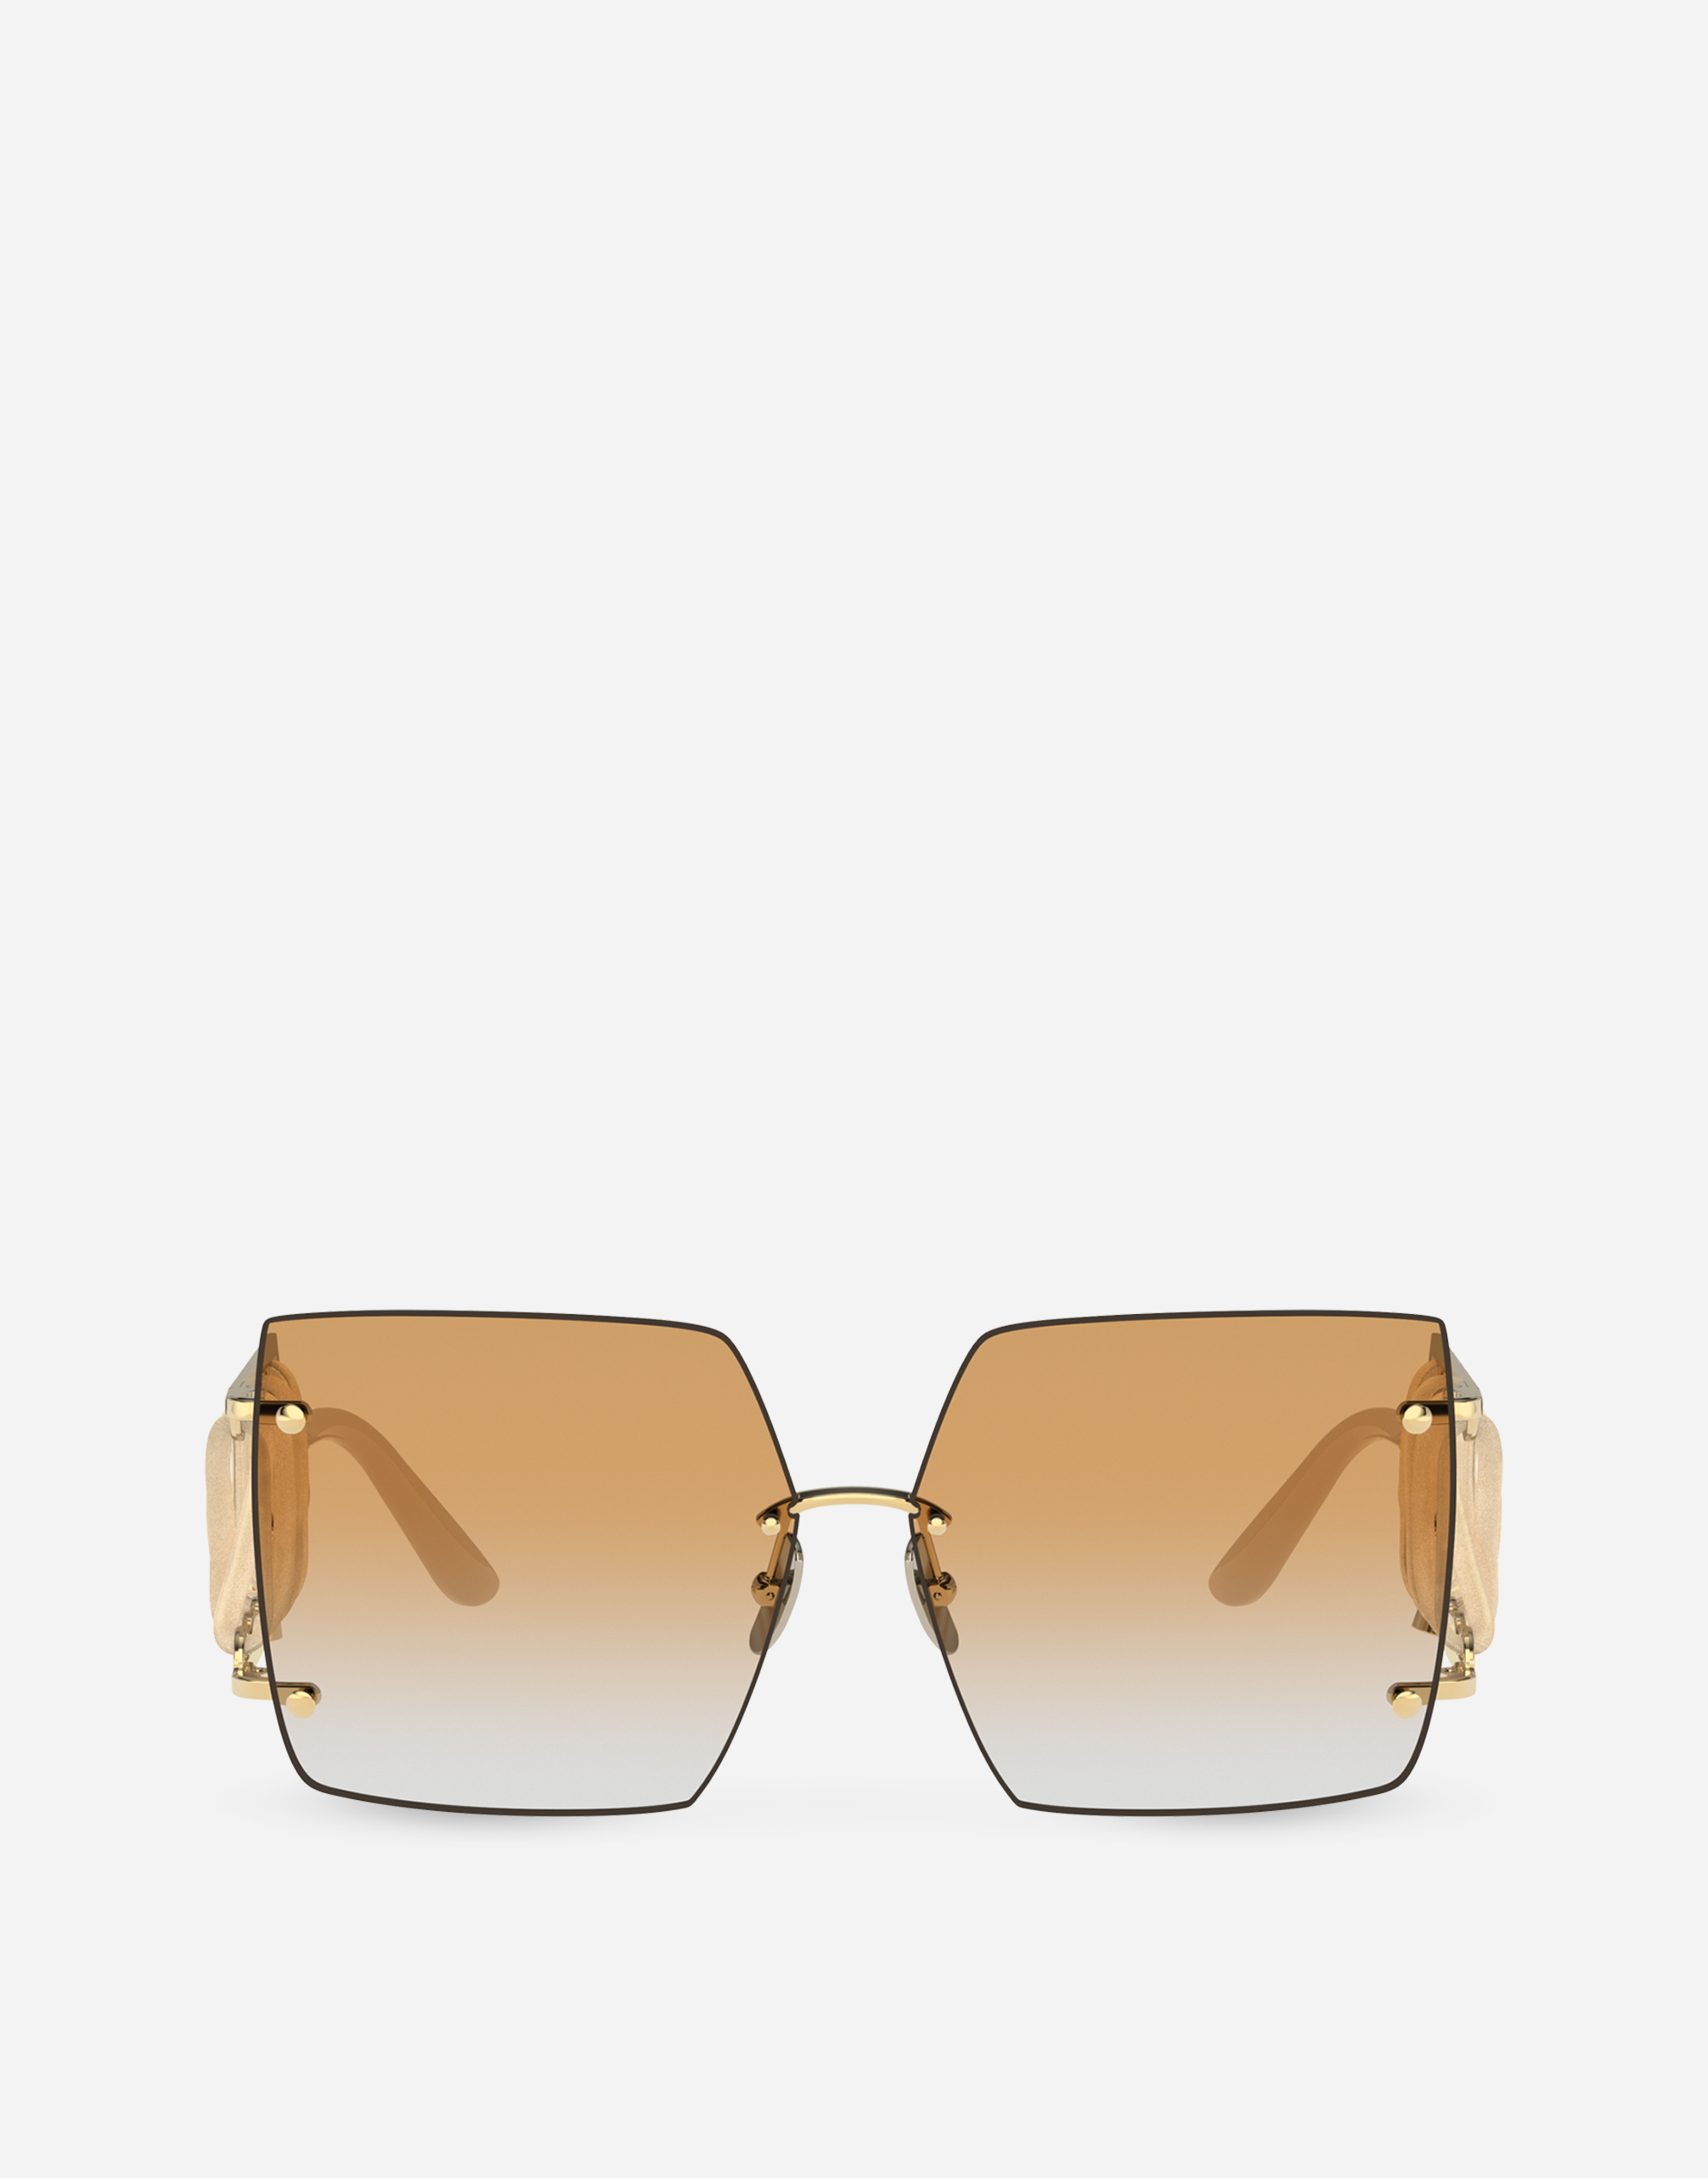 Foundation sunglasses in Gold